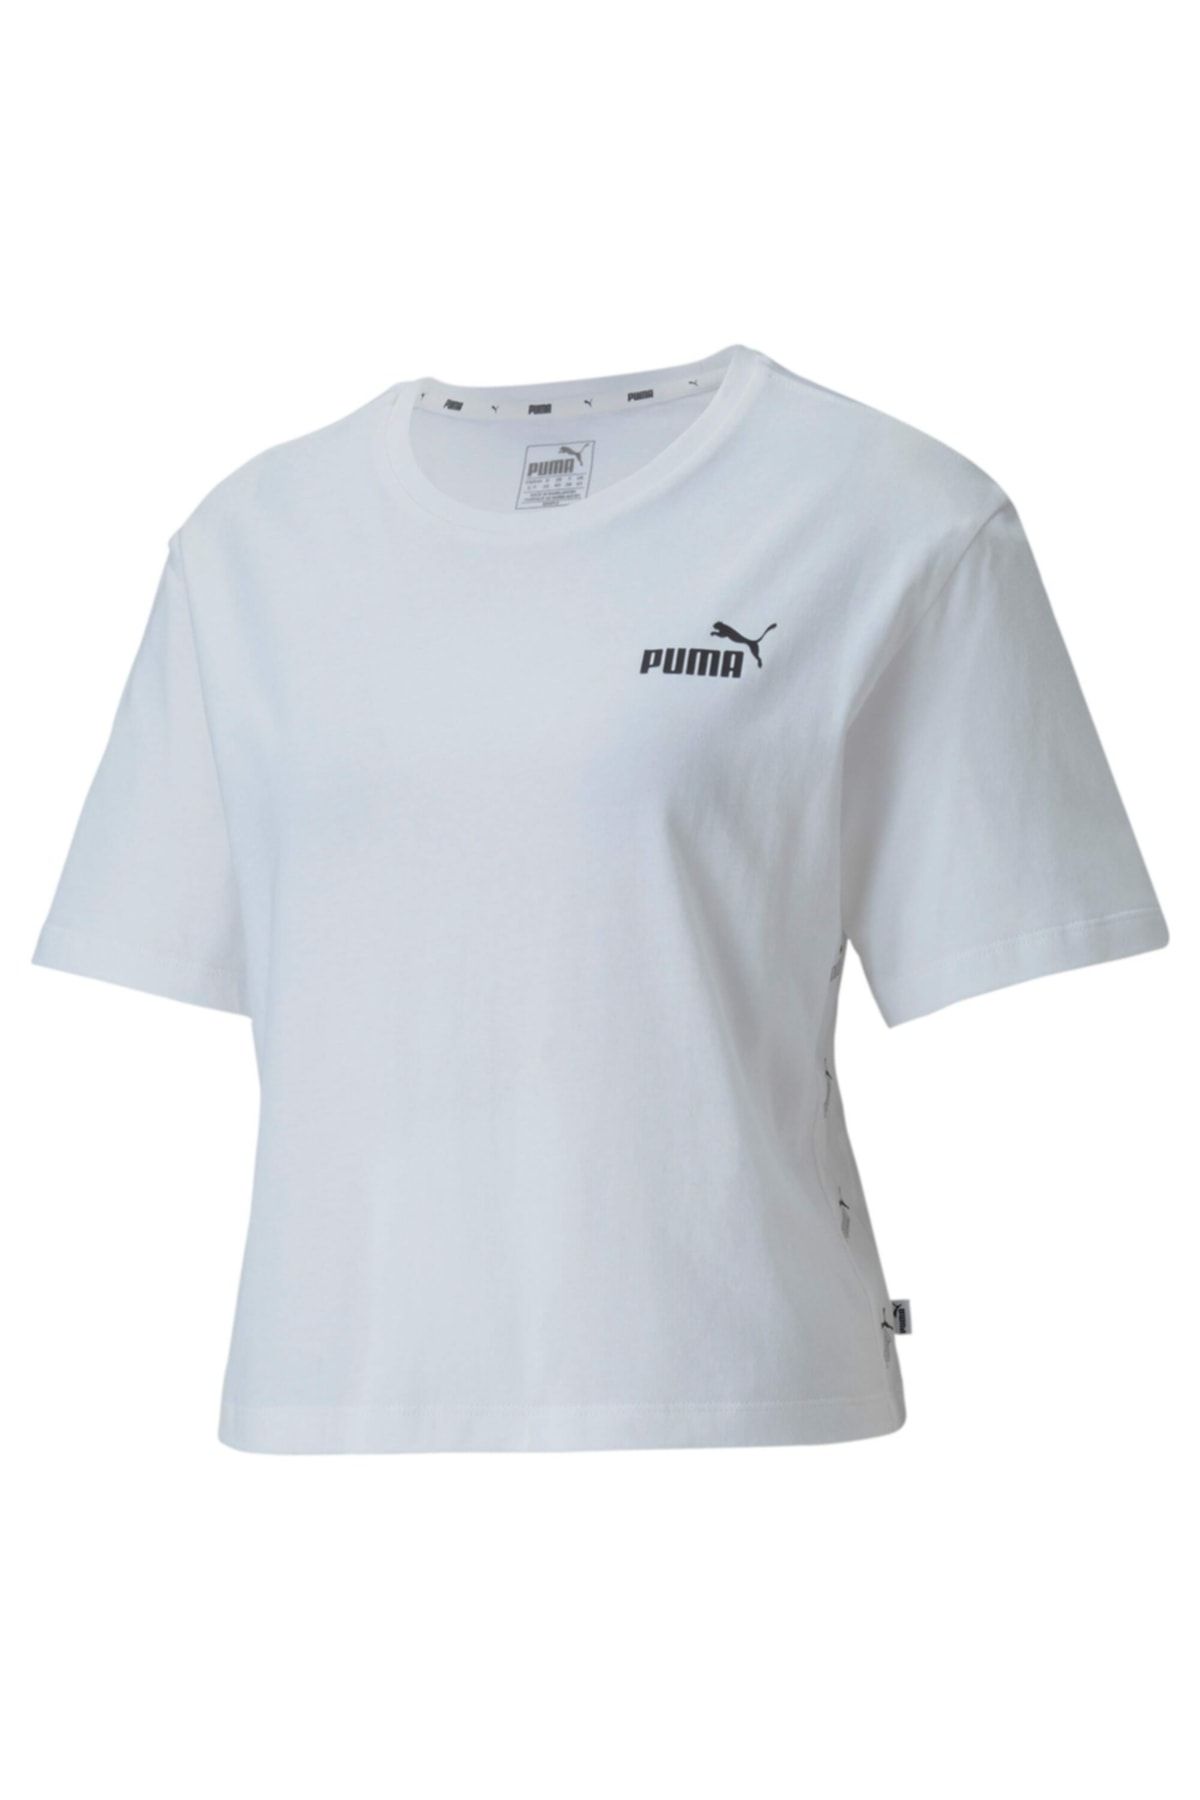 Puma AMPLIFIED Beyaz Kadın T-Shirt 101119449